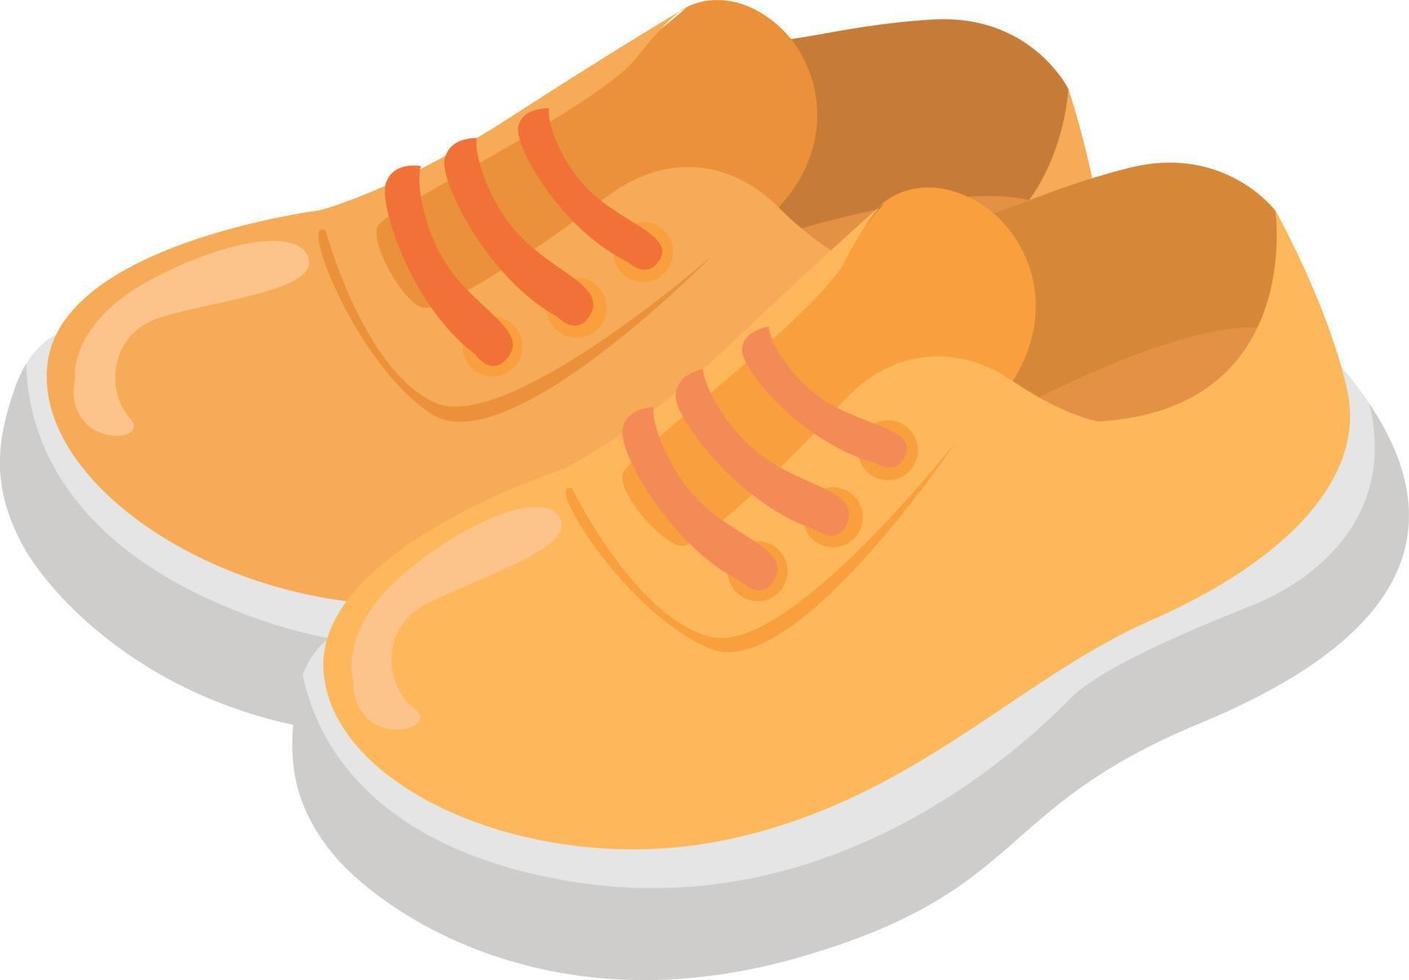 gul skor, illustration, vektor på vit bakgrund.